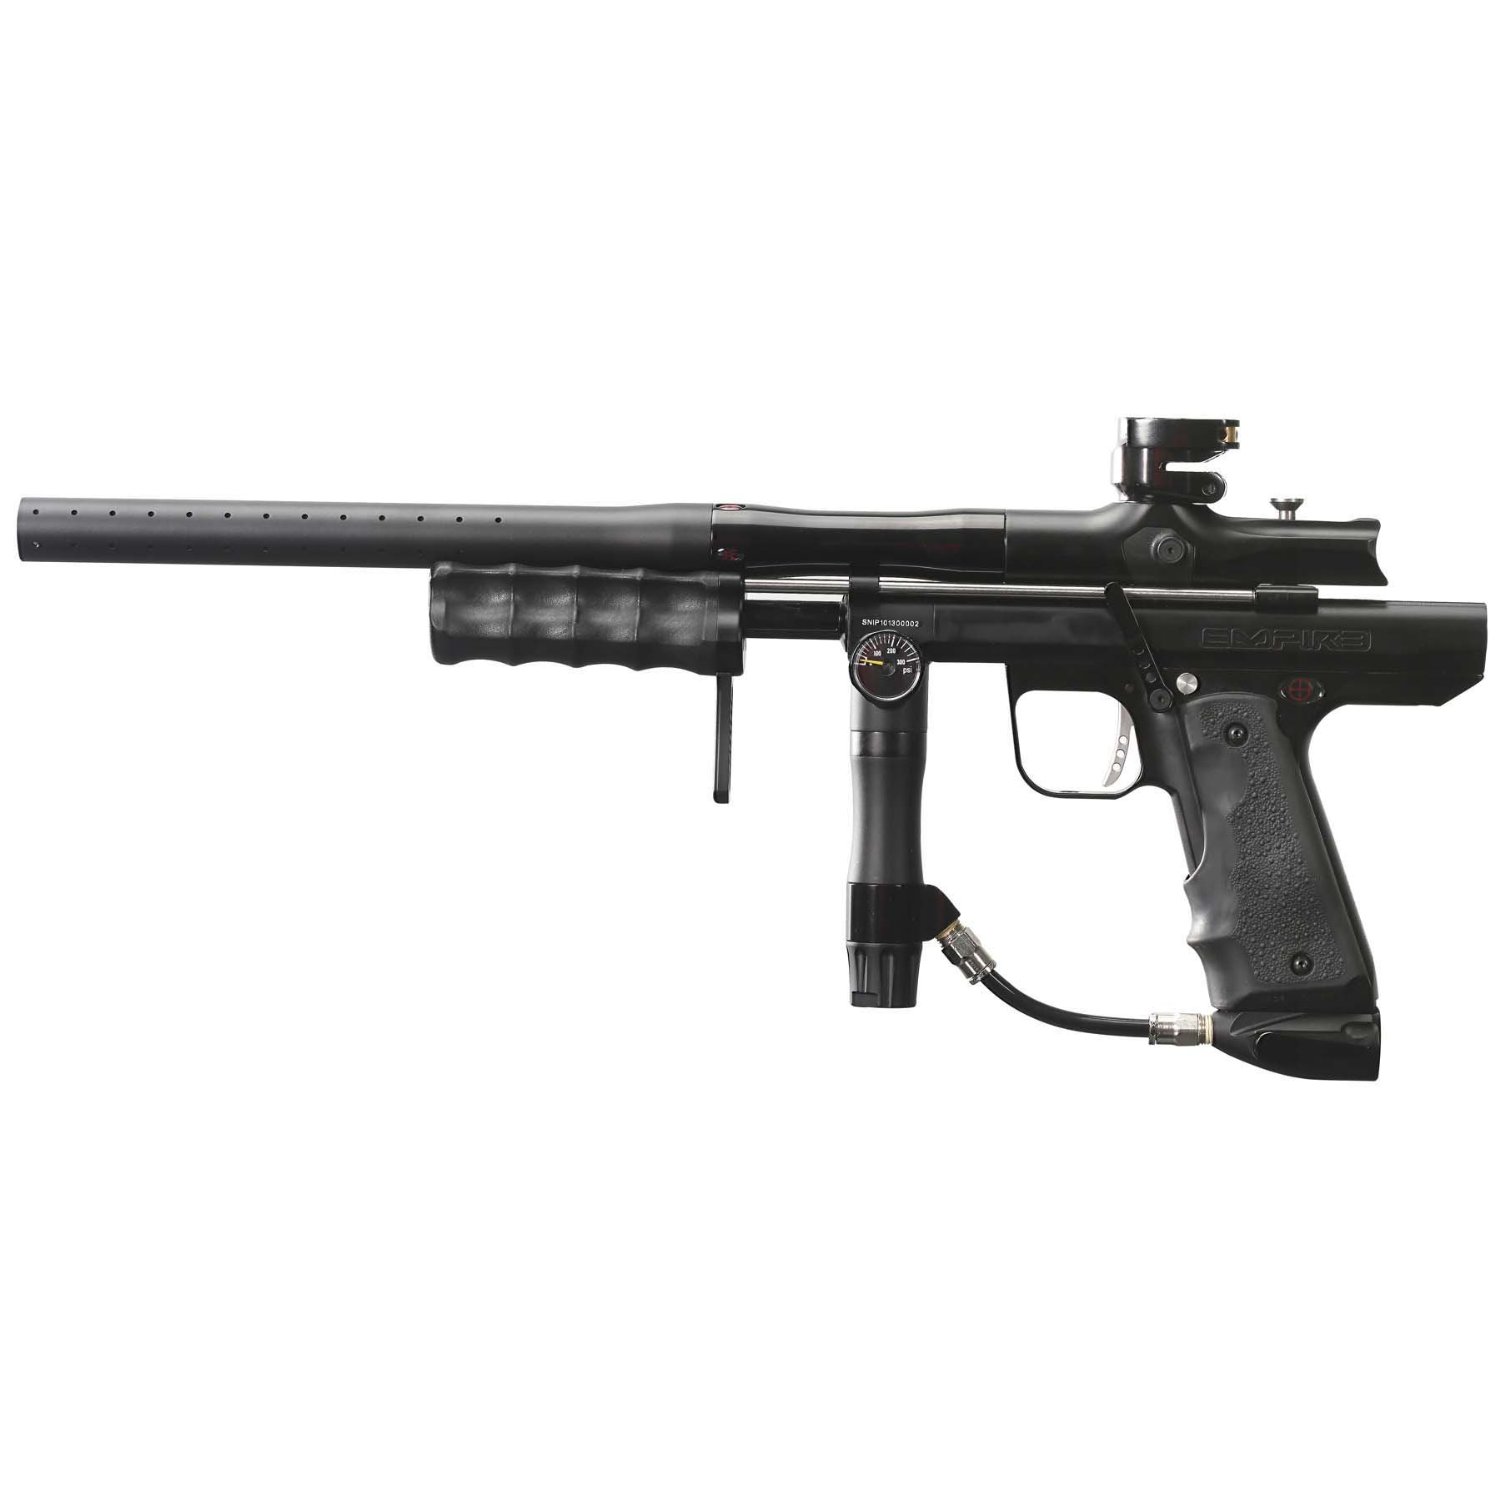 Empire Paintball Sniper Pump Marker with Barrel Kit, Dust Black/Polished Black